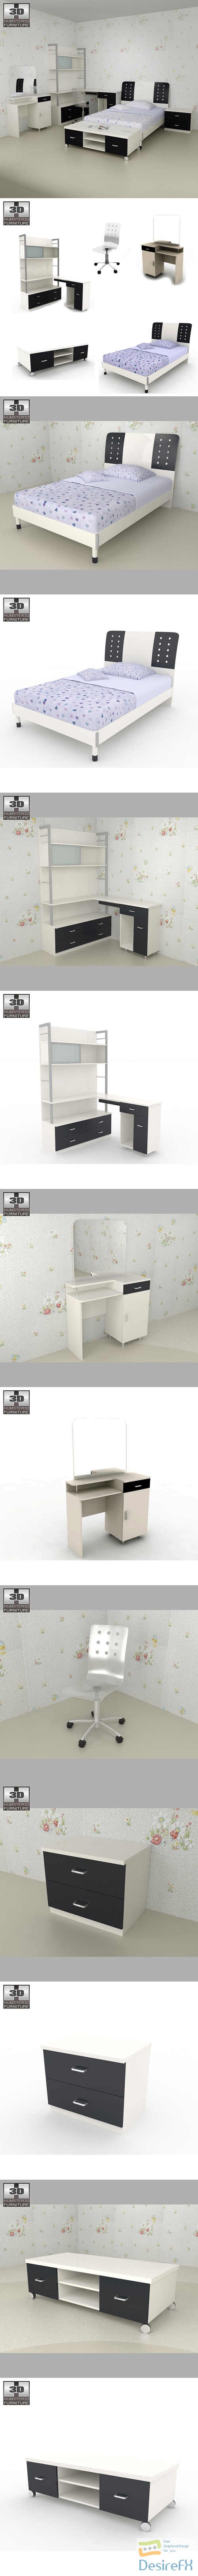 Nursery Room Furniture 06 Set 3D Model